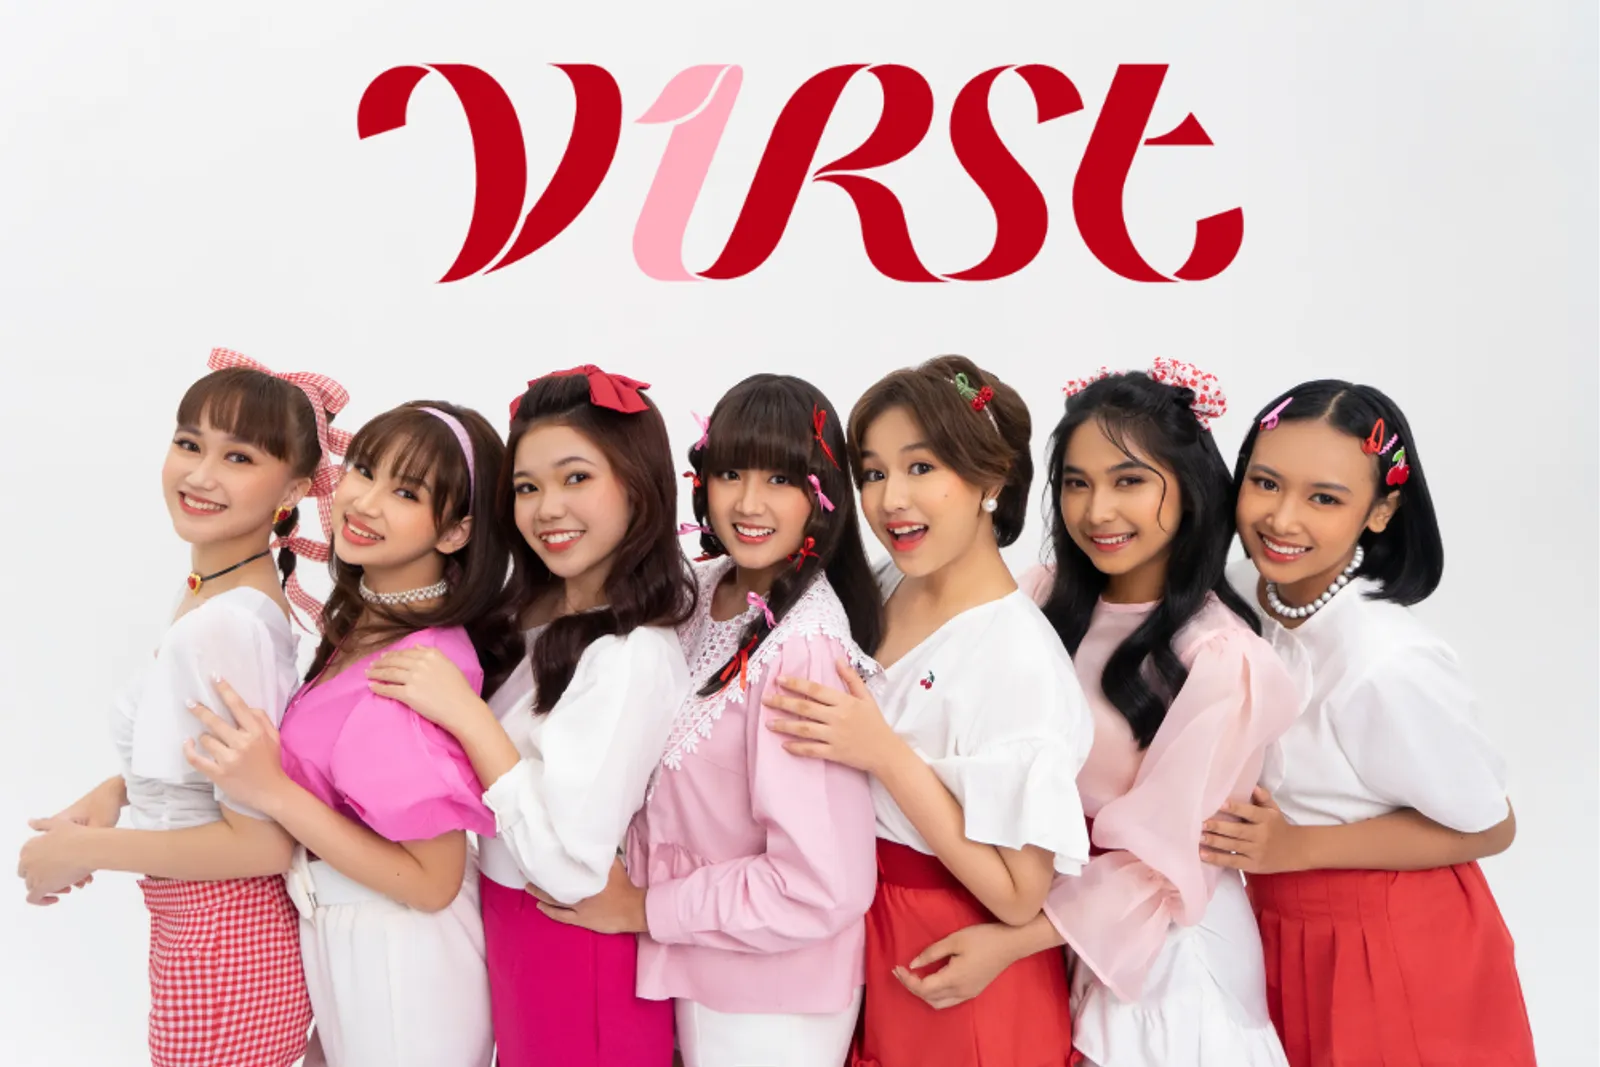 Yuk, Kenalan dengan V1RST, Girl Group Indonesia Baru Adik dari UN1TY